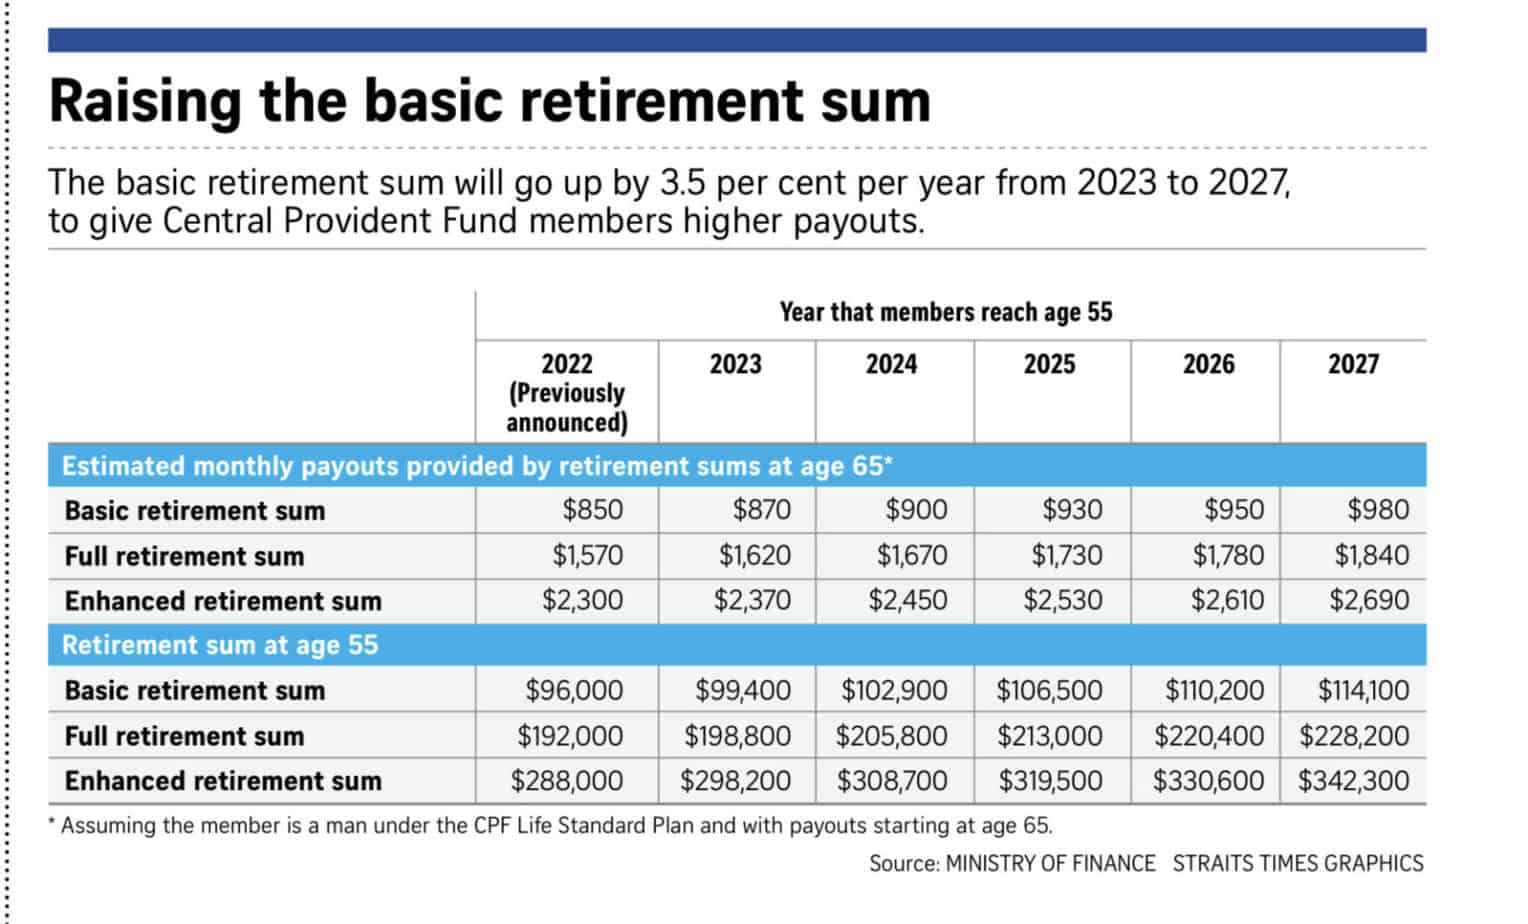 CPF Basic Retirement Sum 2023 to 2027